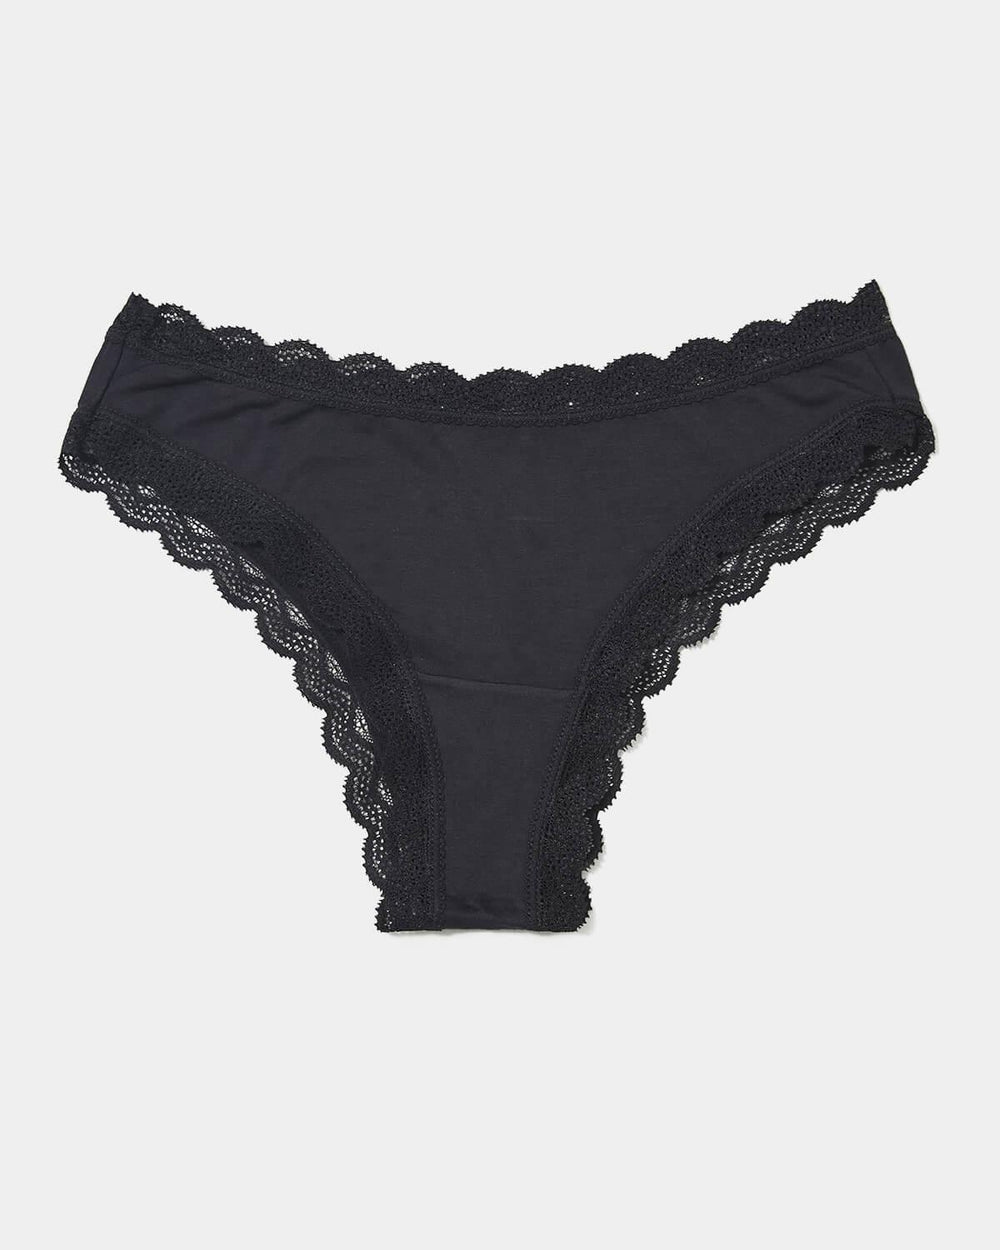 Victoria's Secret LOVE CLOUD Hiphugger Panty in Black Lace Trim, Large,  NWT!